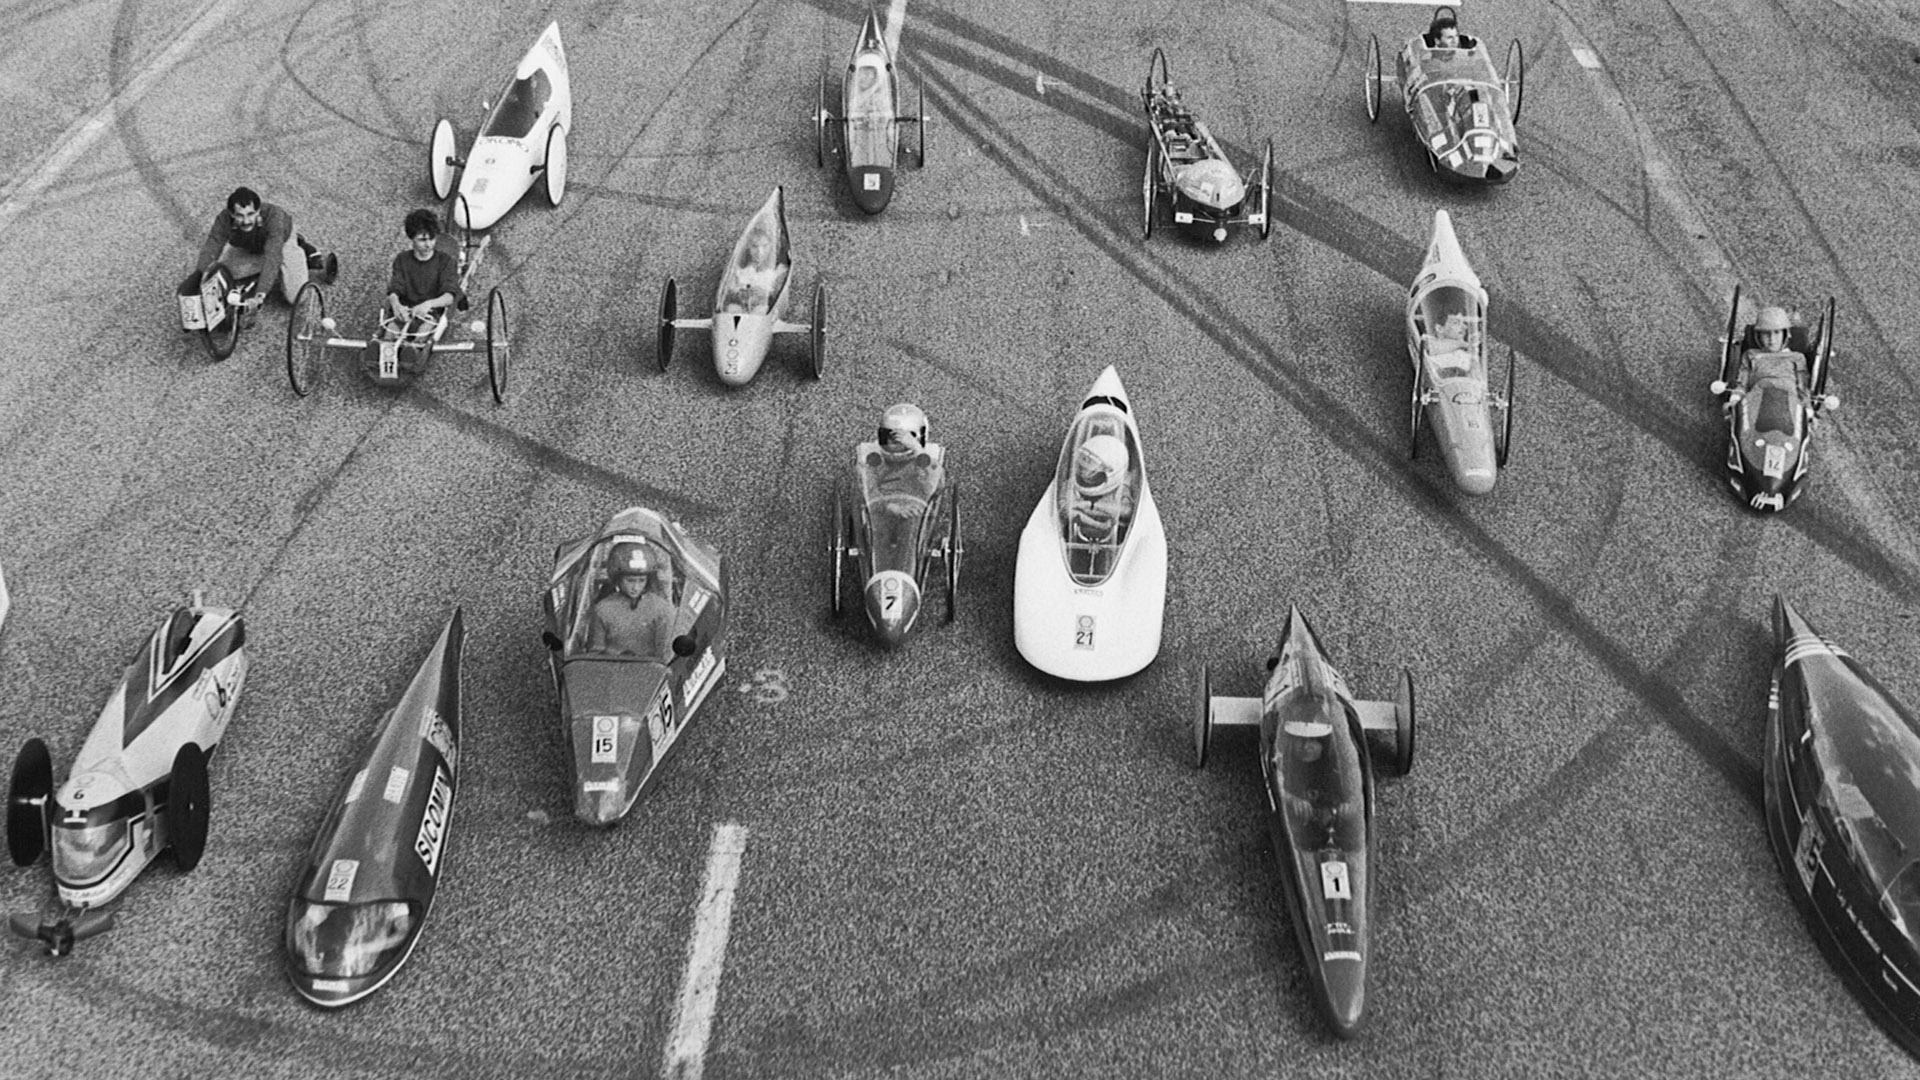 Shell Eco-marathon cars on a racing track